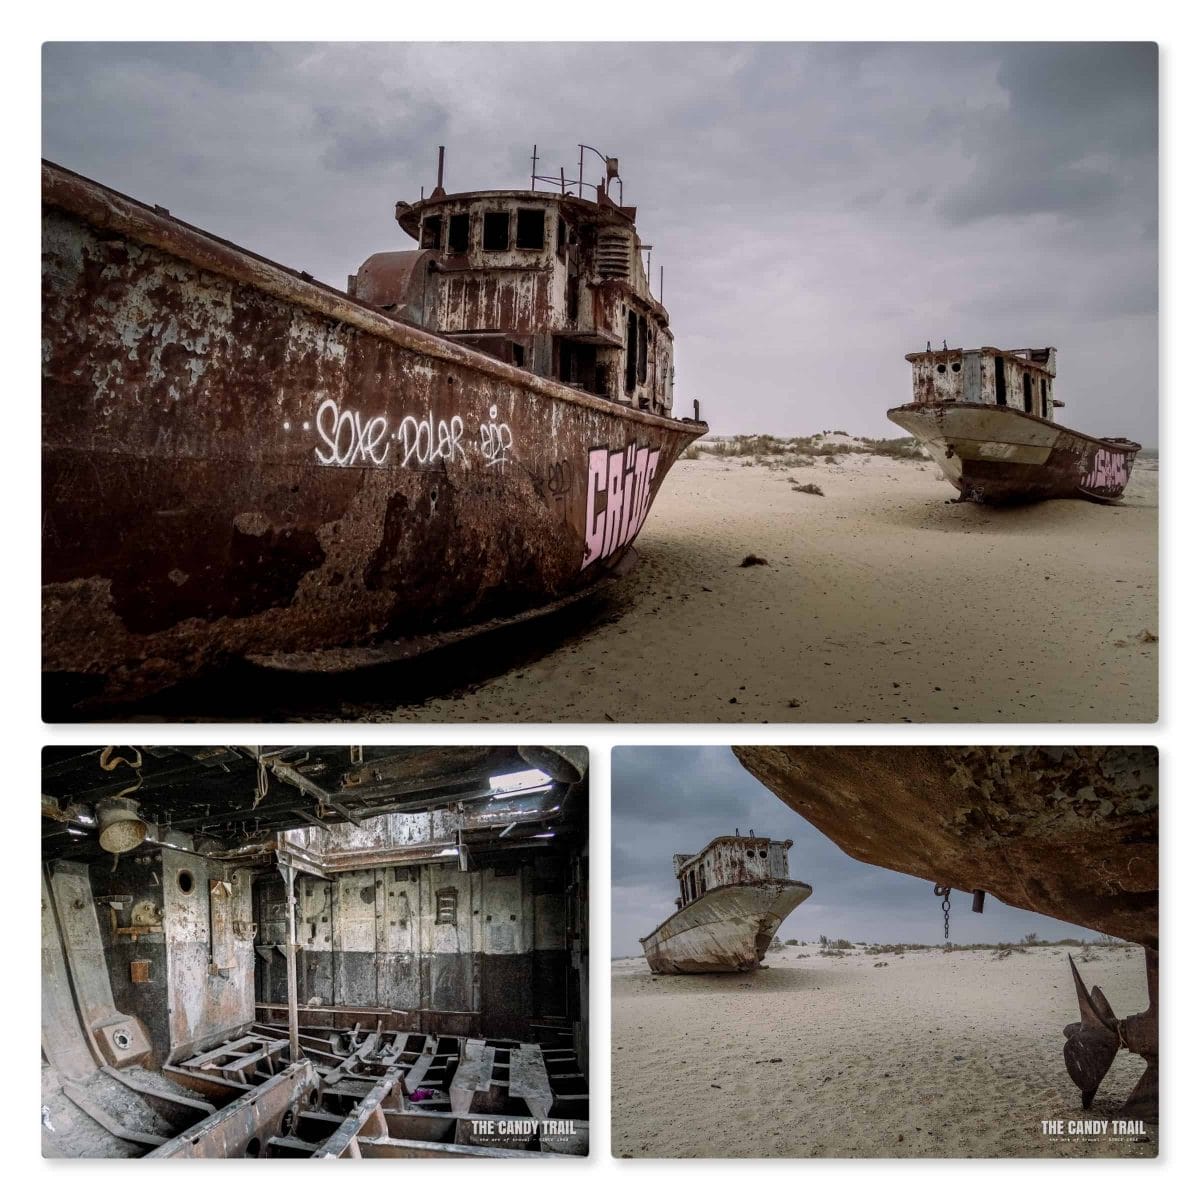 rusty ships aral sea images at moynaq in uzbekistan